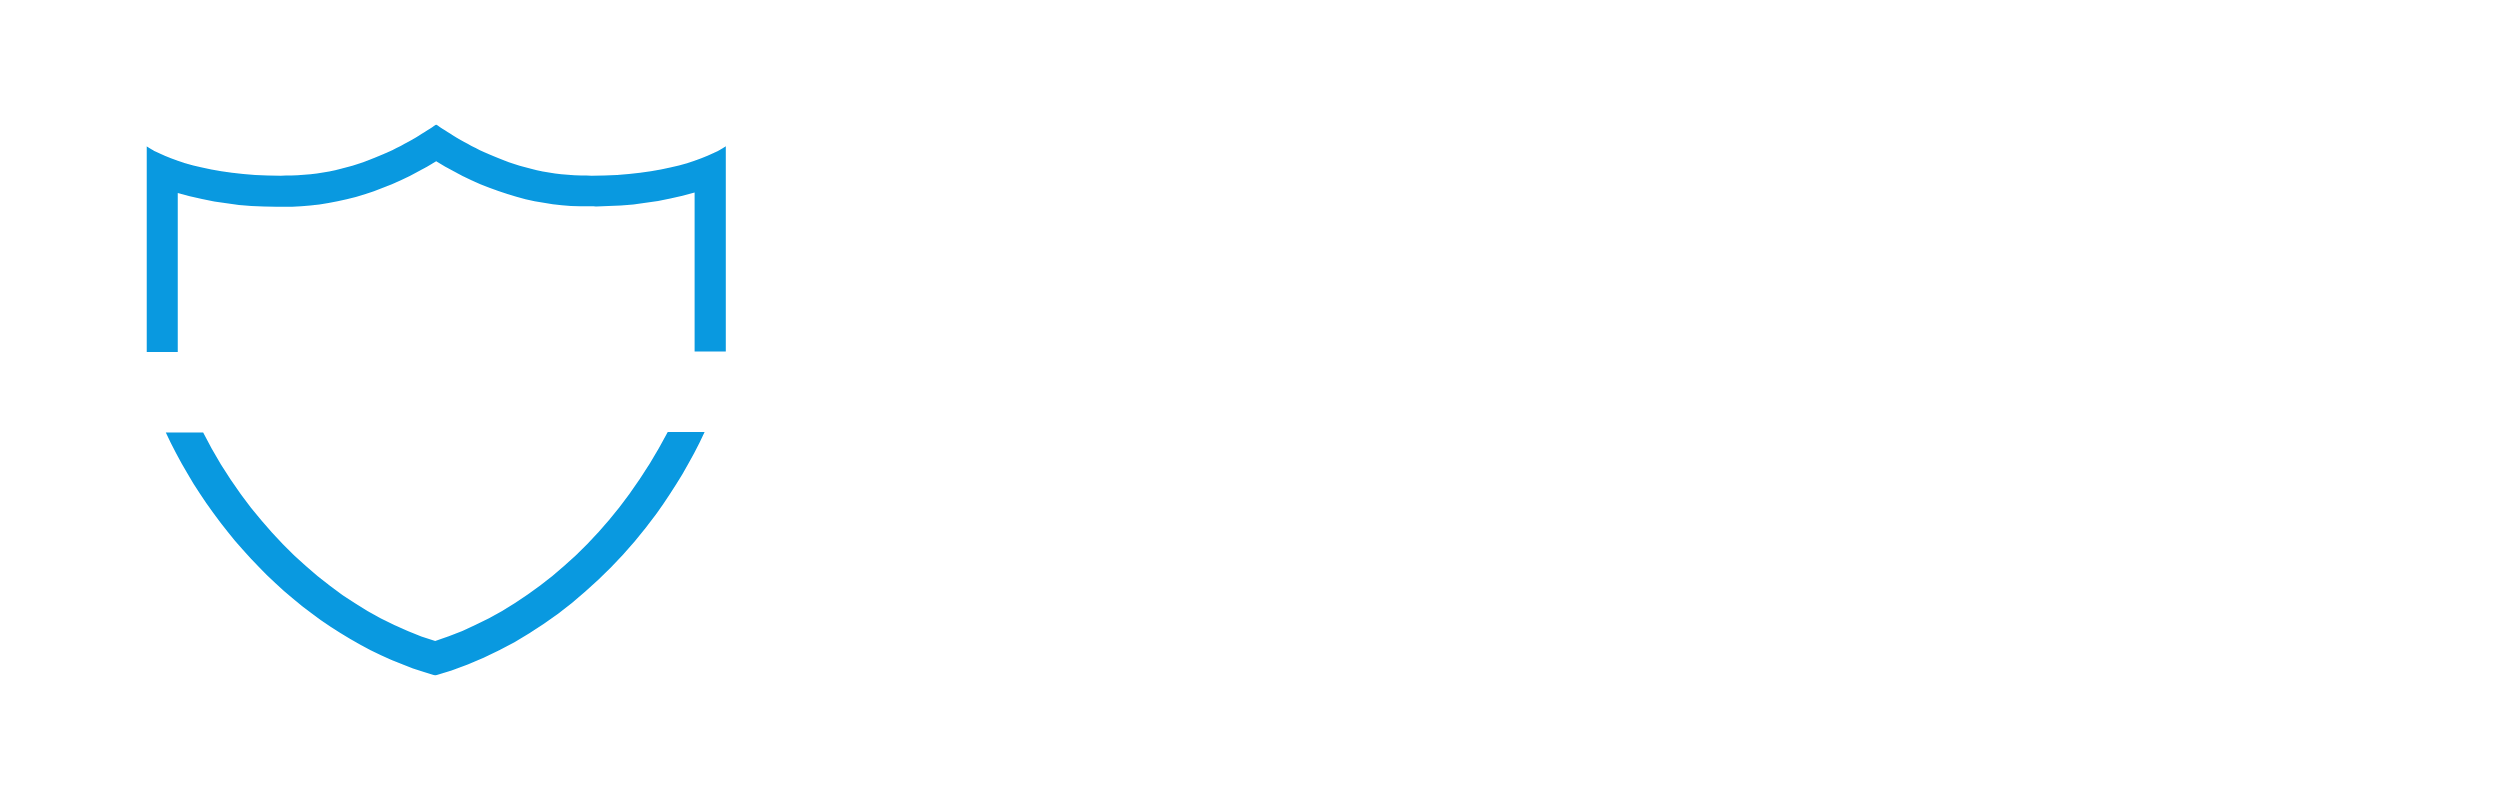 LD Security Services LTD